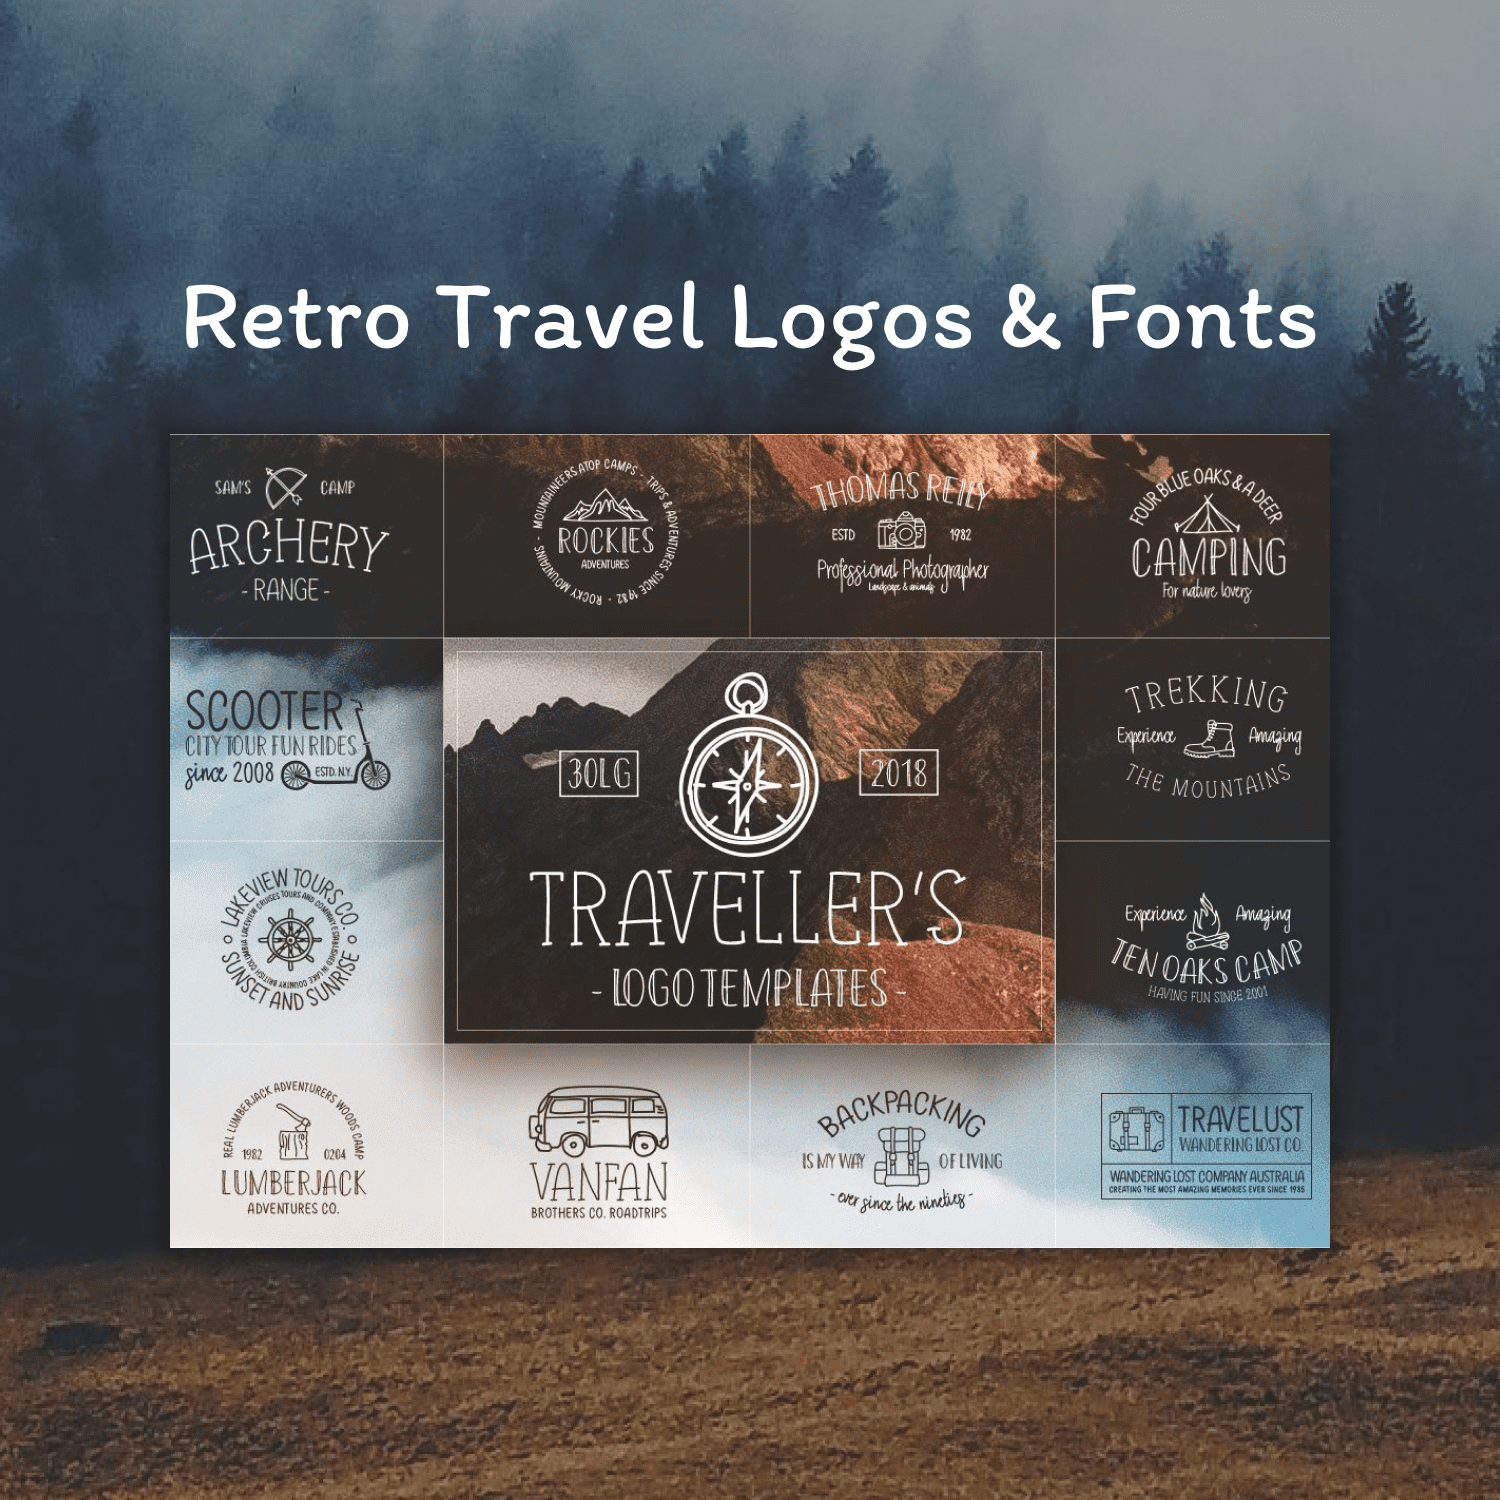 Retro Travel Logos & Fonts.